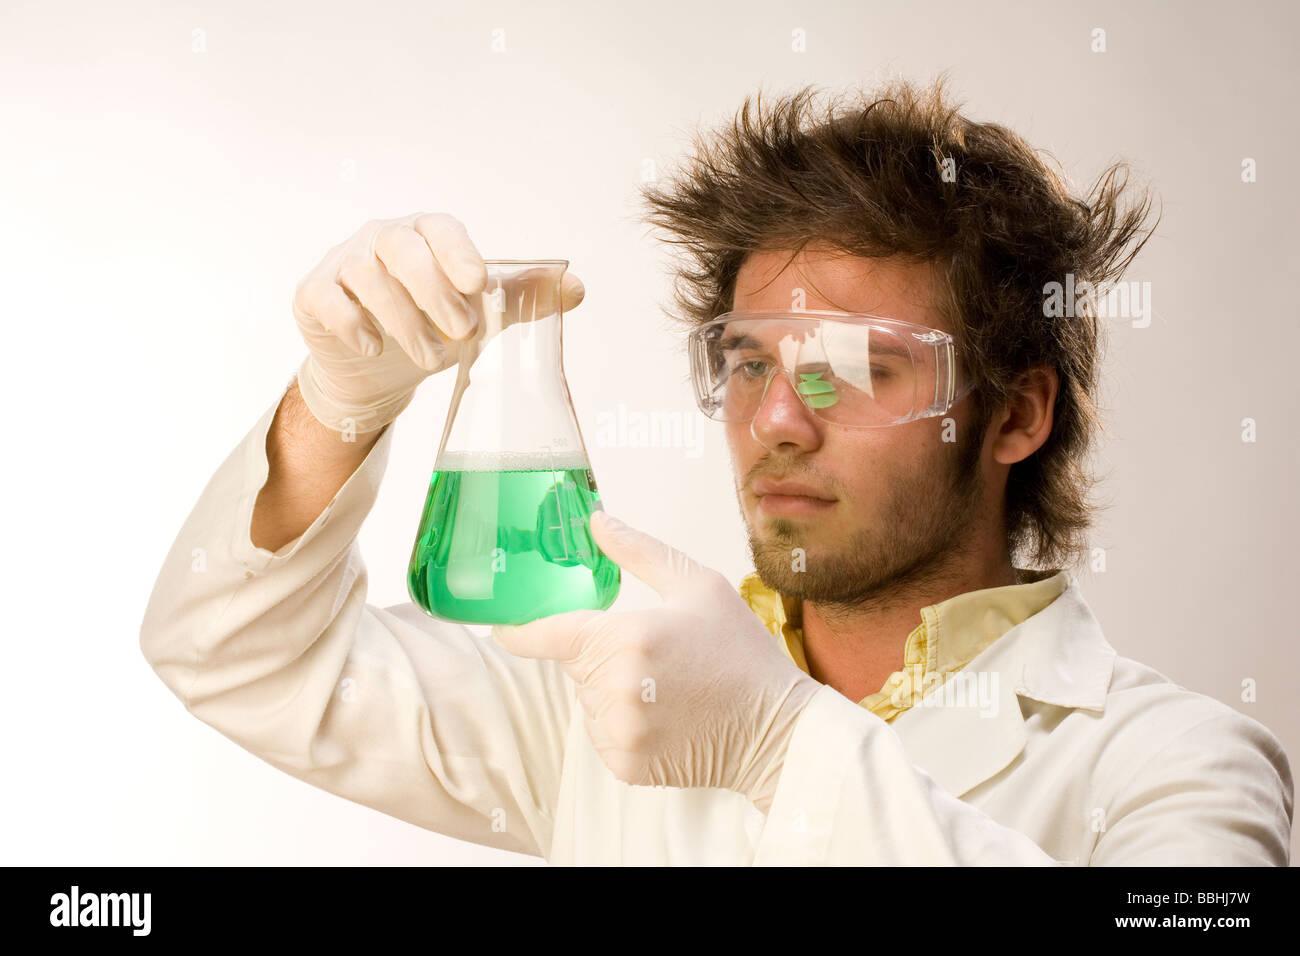 chemist biologist scientist man boy with test tube retrato de hombre científico con probeta Stock Photo